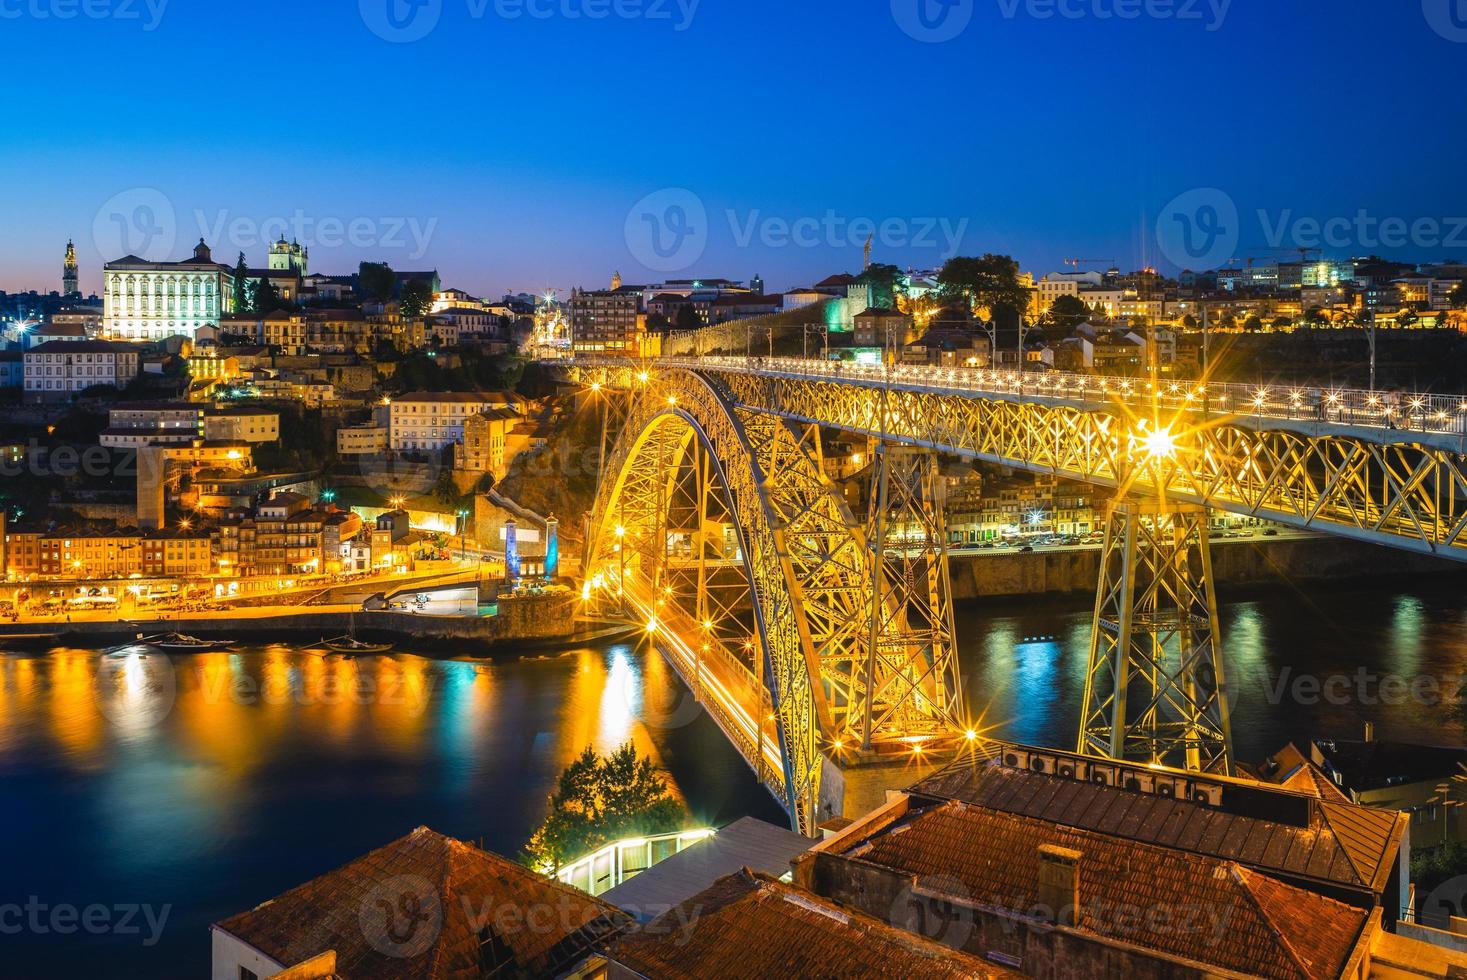 dom luiz-brug over de rivier de douro in porto in portugal 's nachts foto